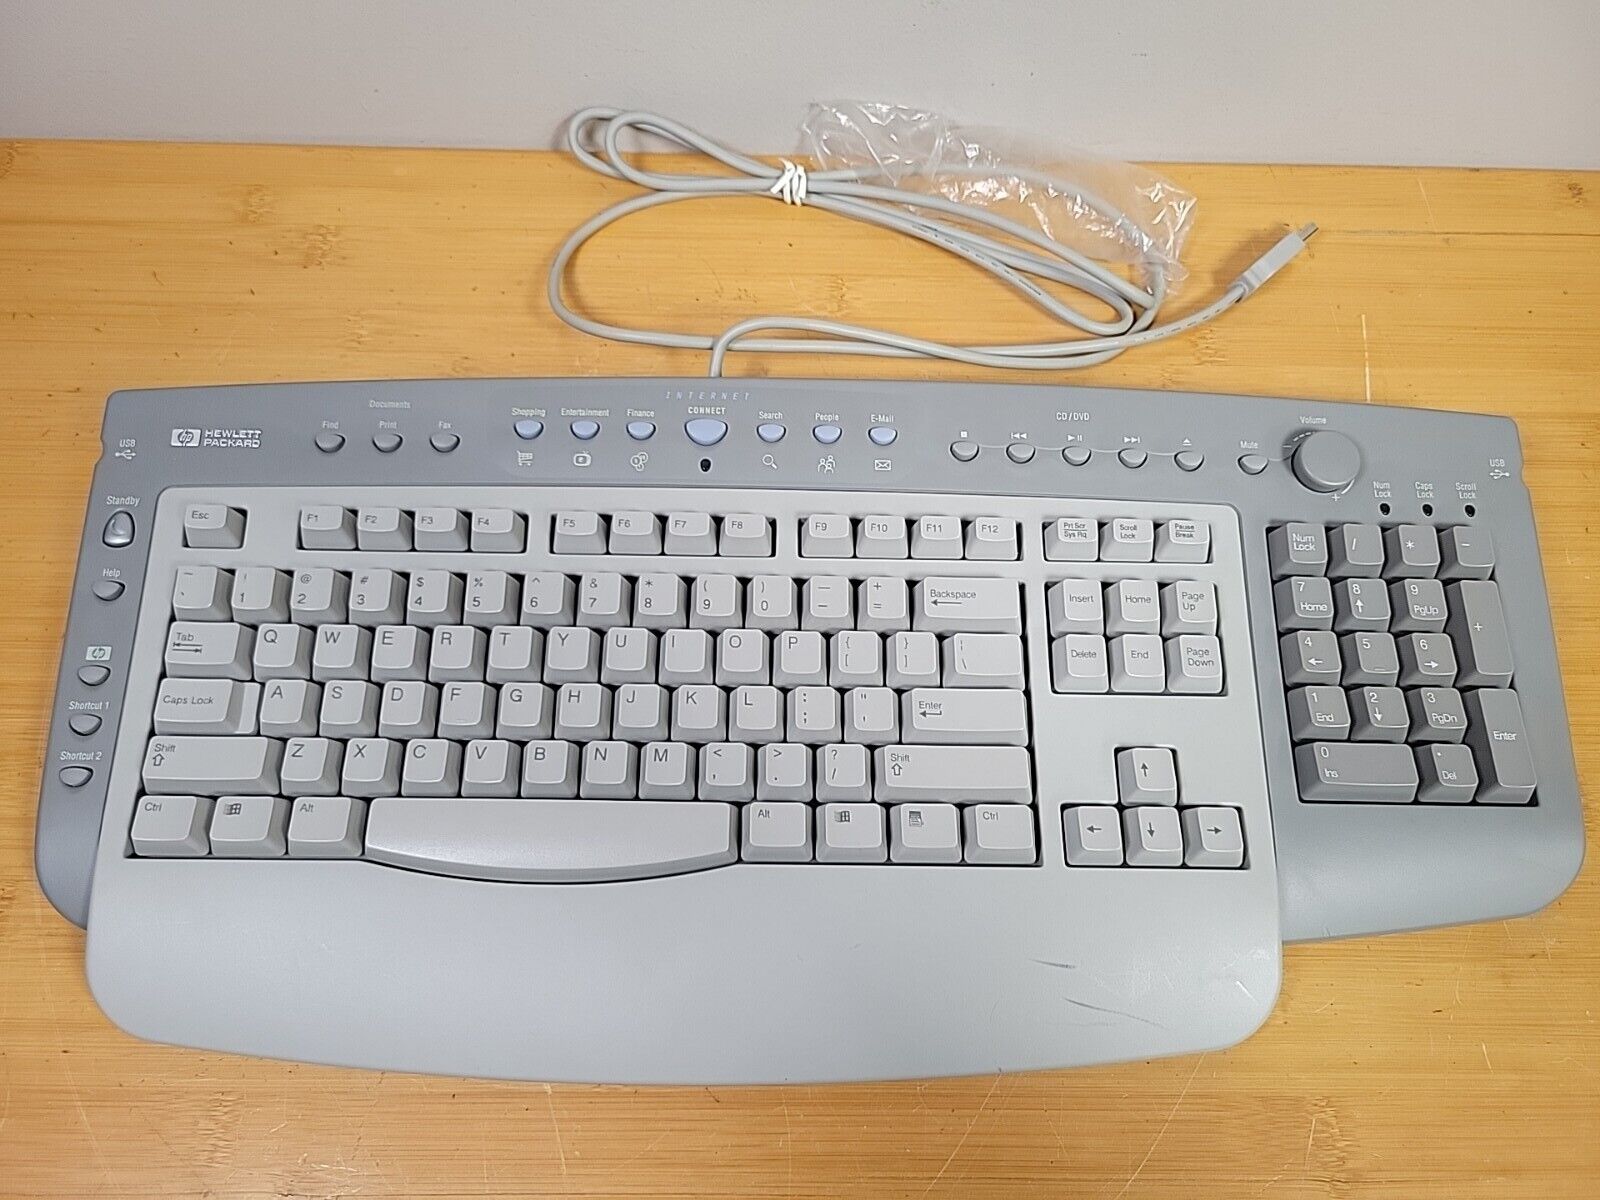 HP 6511-SU Multimedia USB Keyboard Retro vintage PC Hardware 5183-9960